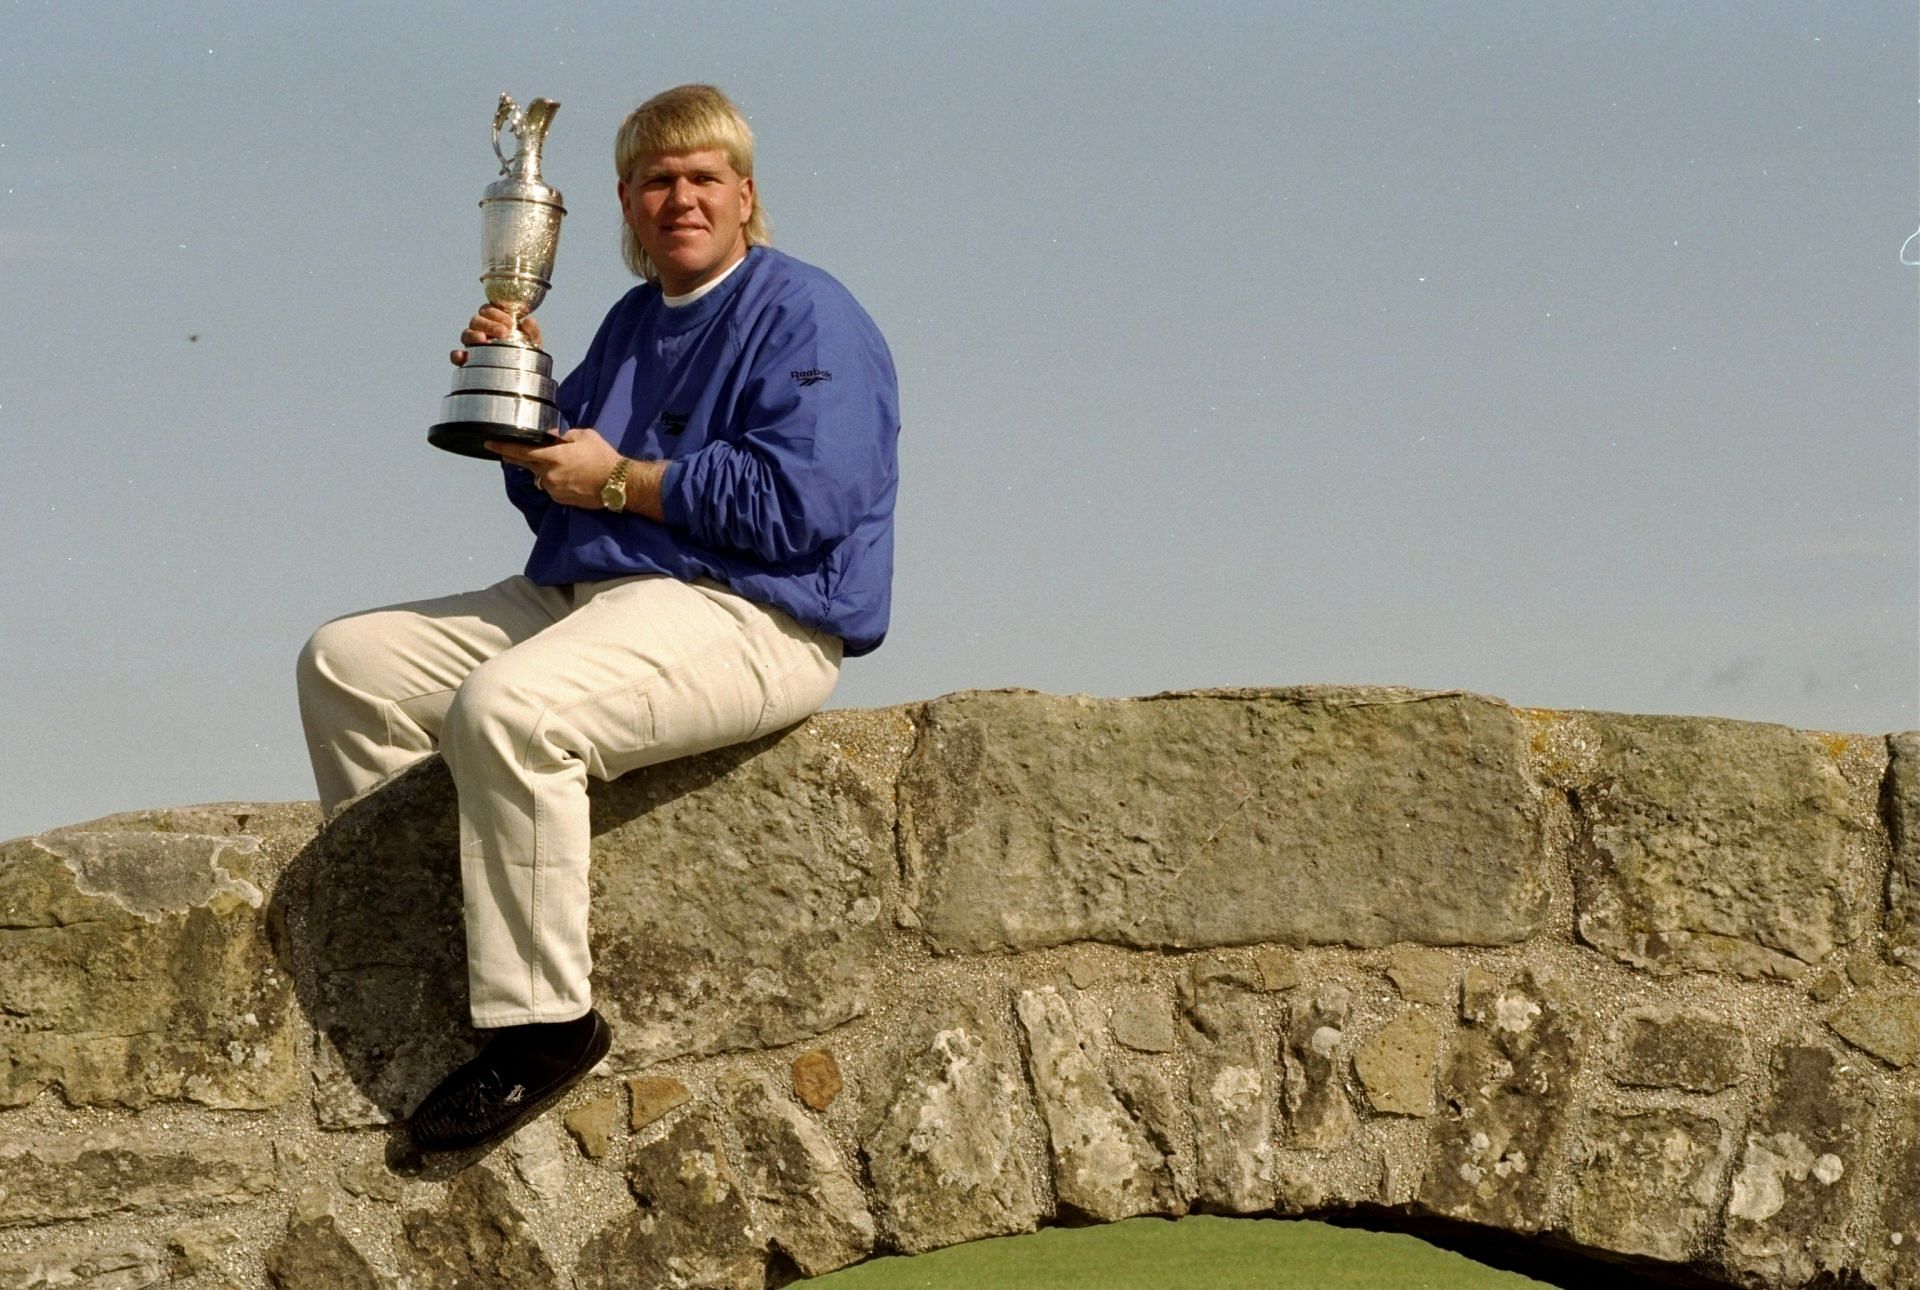 John Daly, The Open Championship, 1995 (Image via Getty).